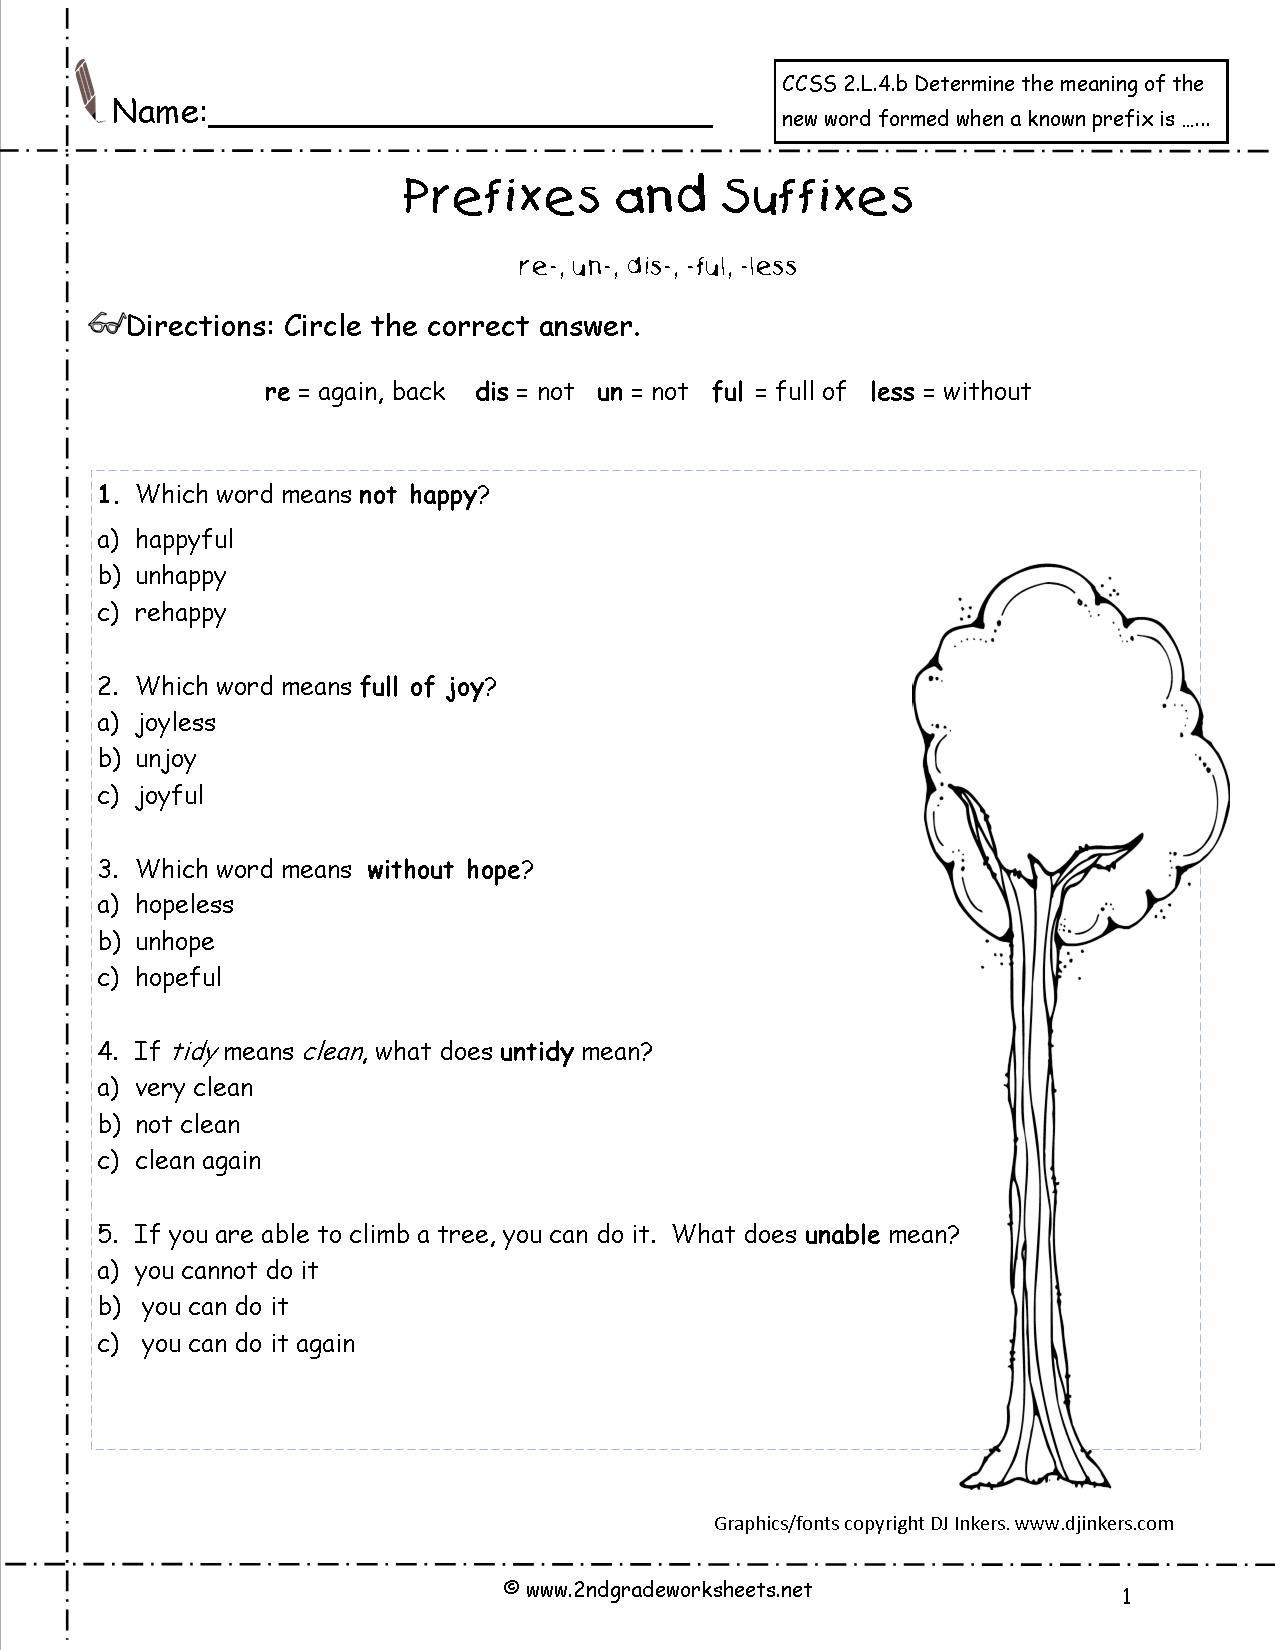 Prefix Suffix Worksheet 3rd Grade Prefix and Suffix Meanings Worksheets